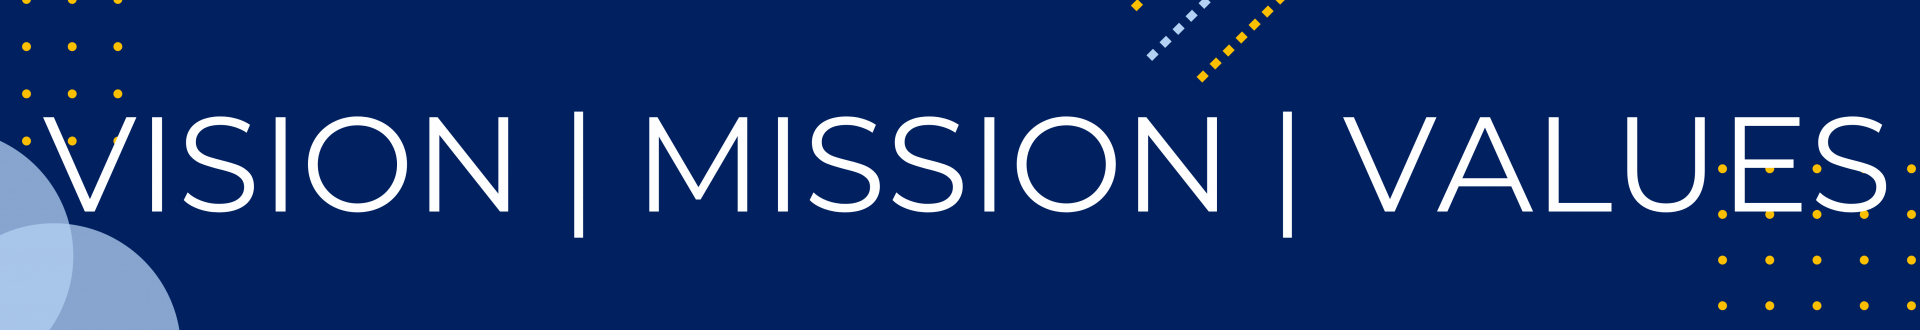 Vision Mission Values logo